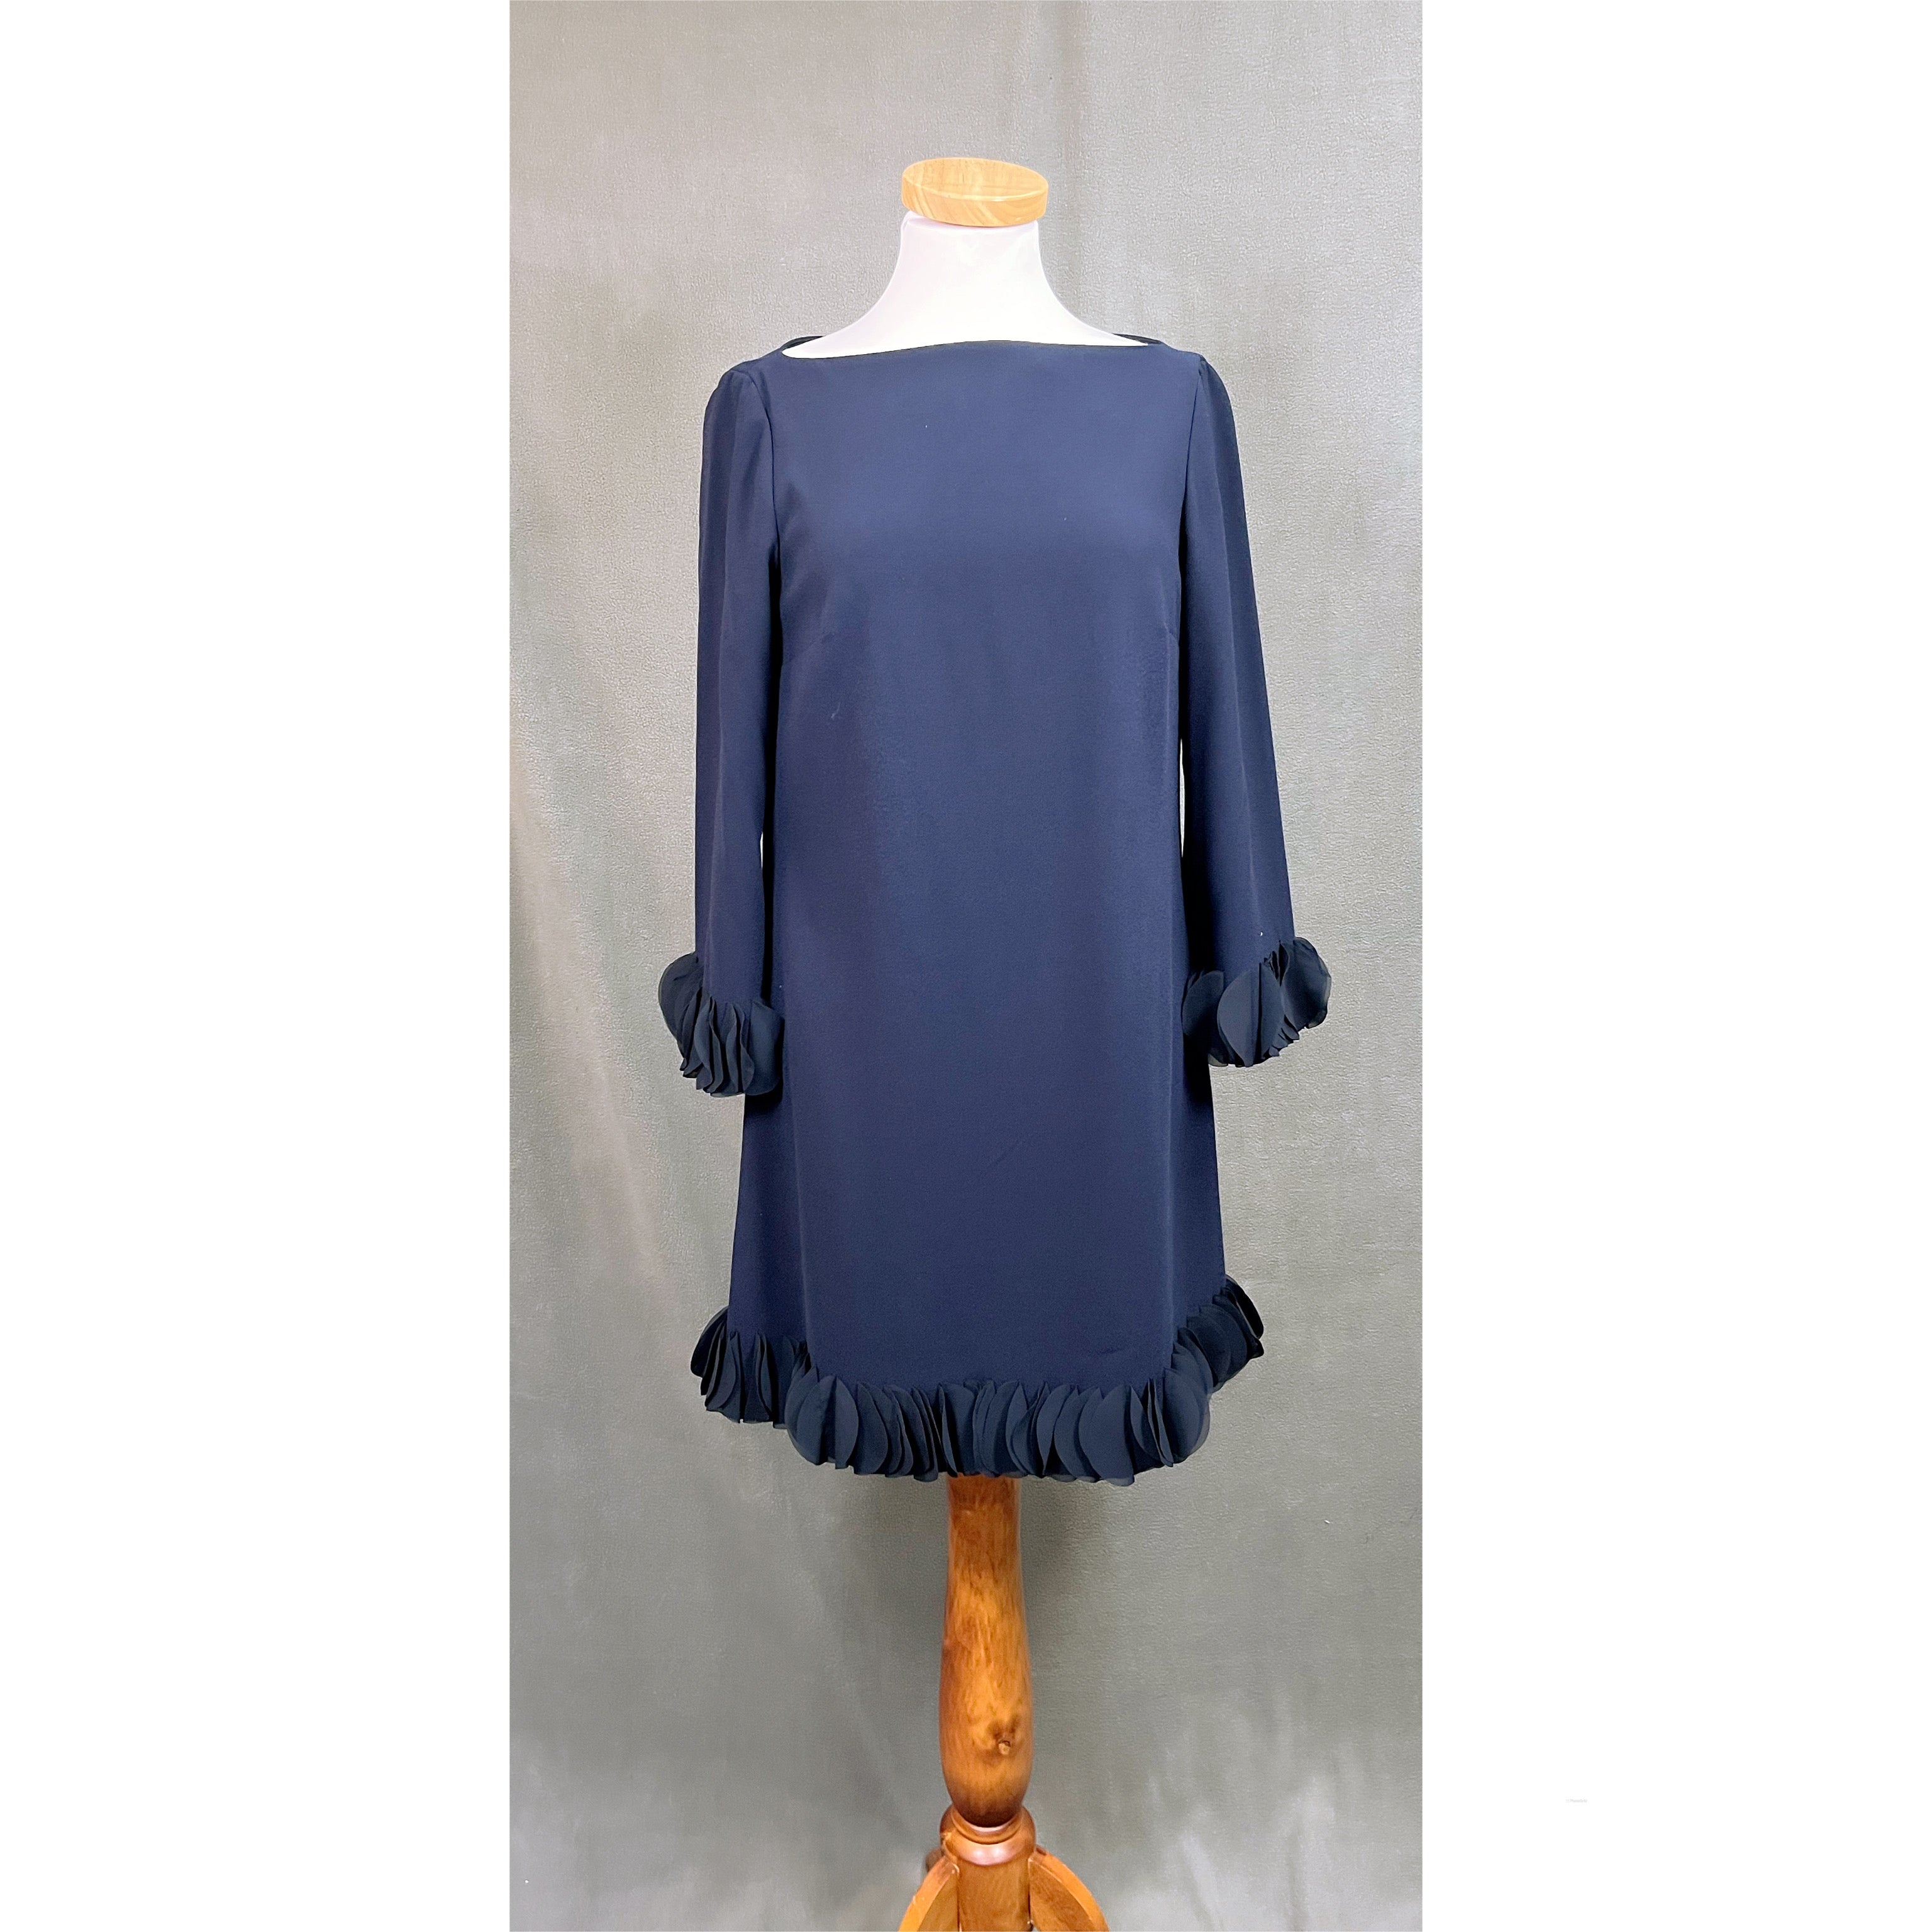 Tahari navy dress, size 4